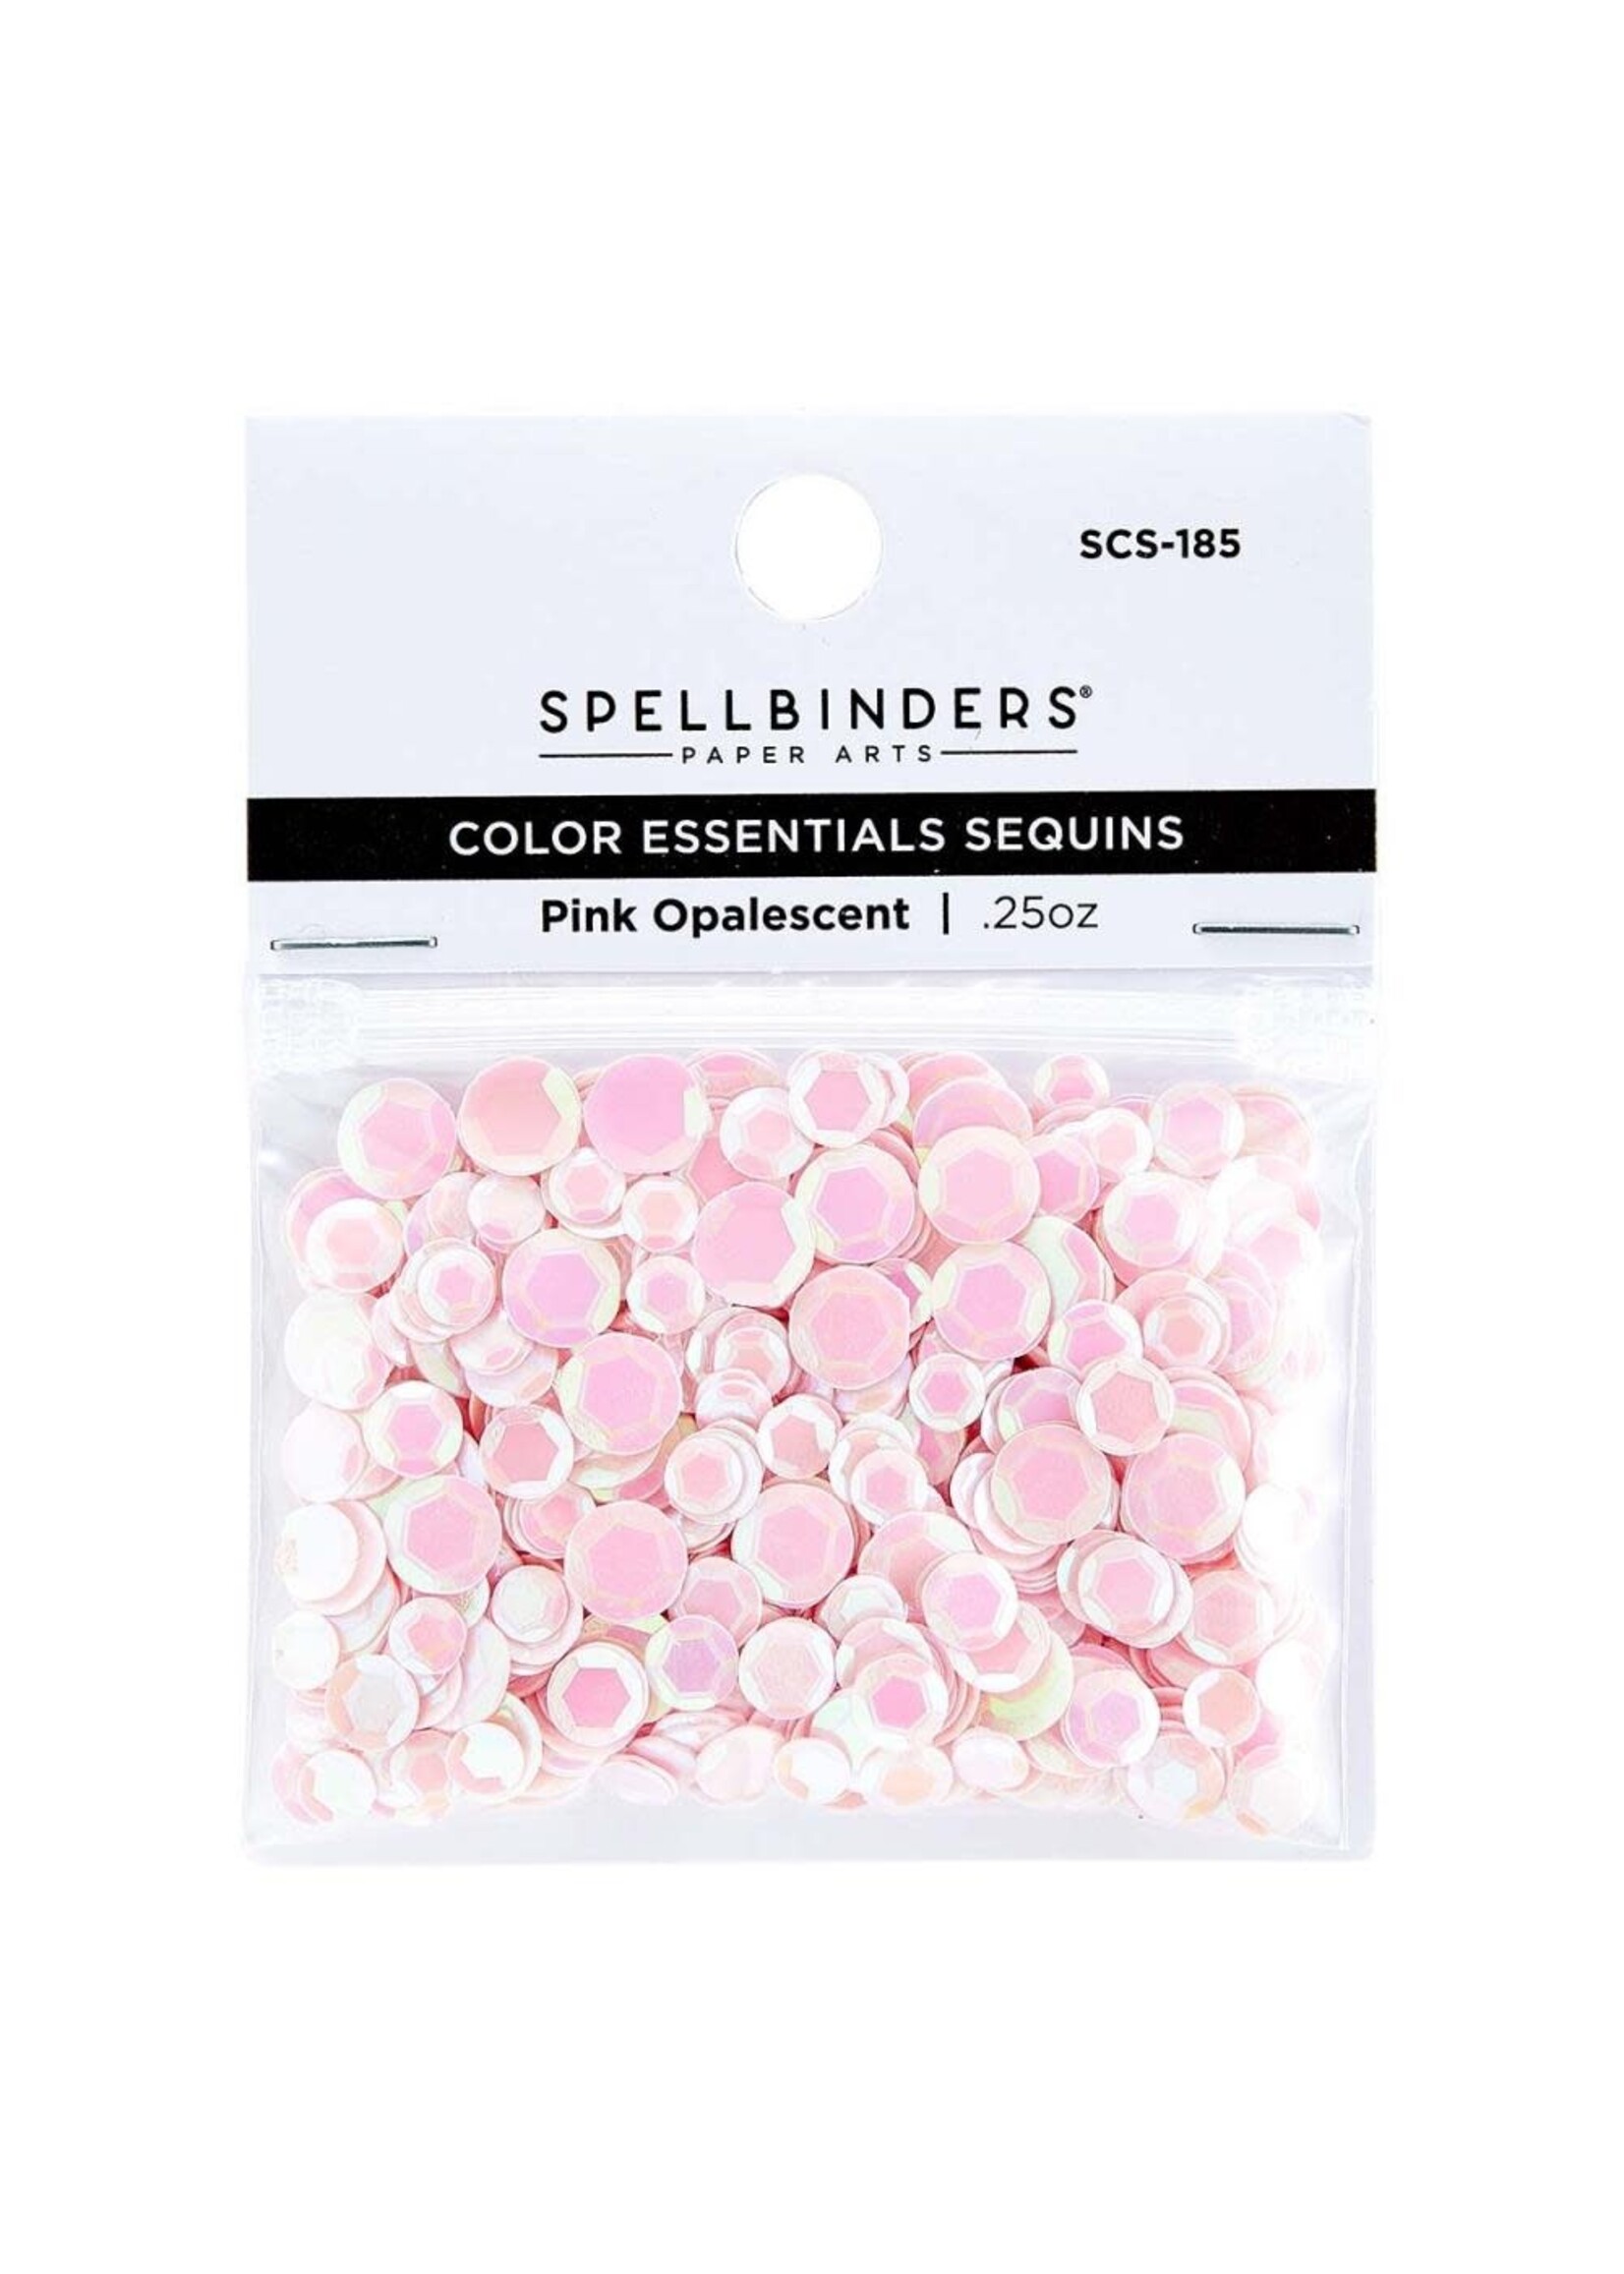 SPELLBINDERS PAPERCRAFTS, INC Color Essentials Sequins, Pink Opalescent